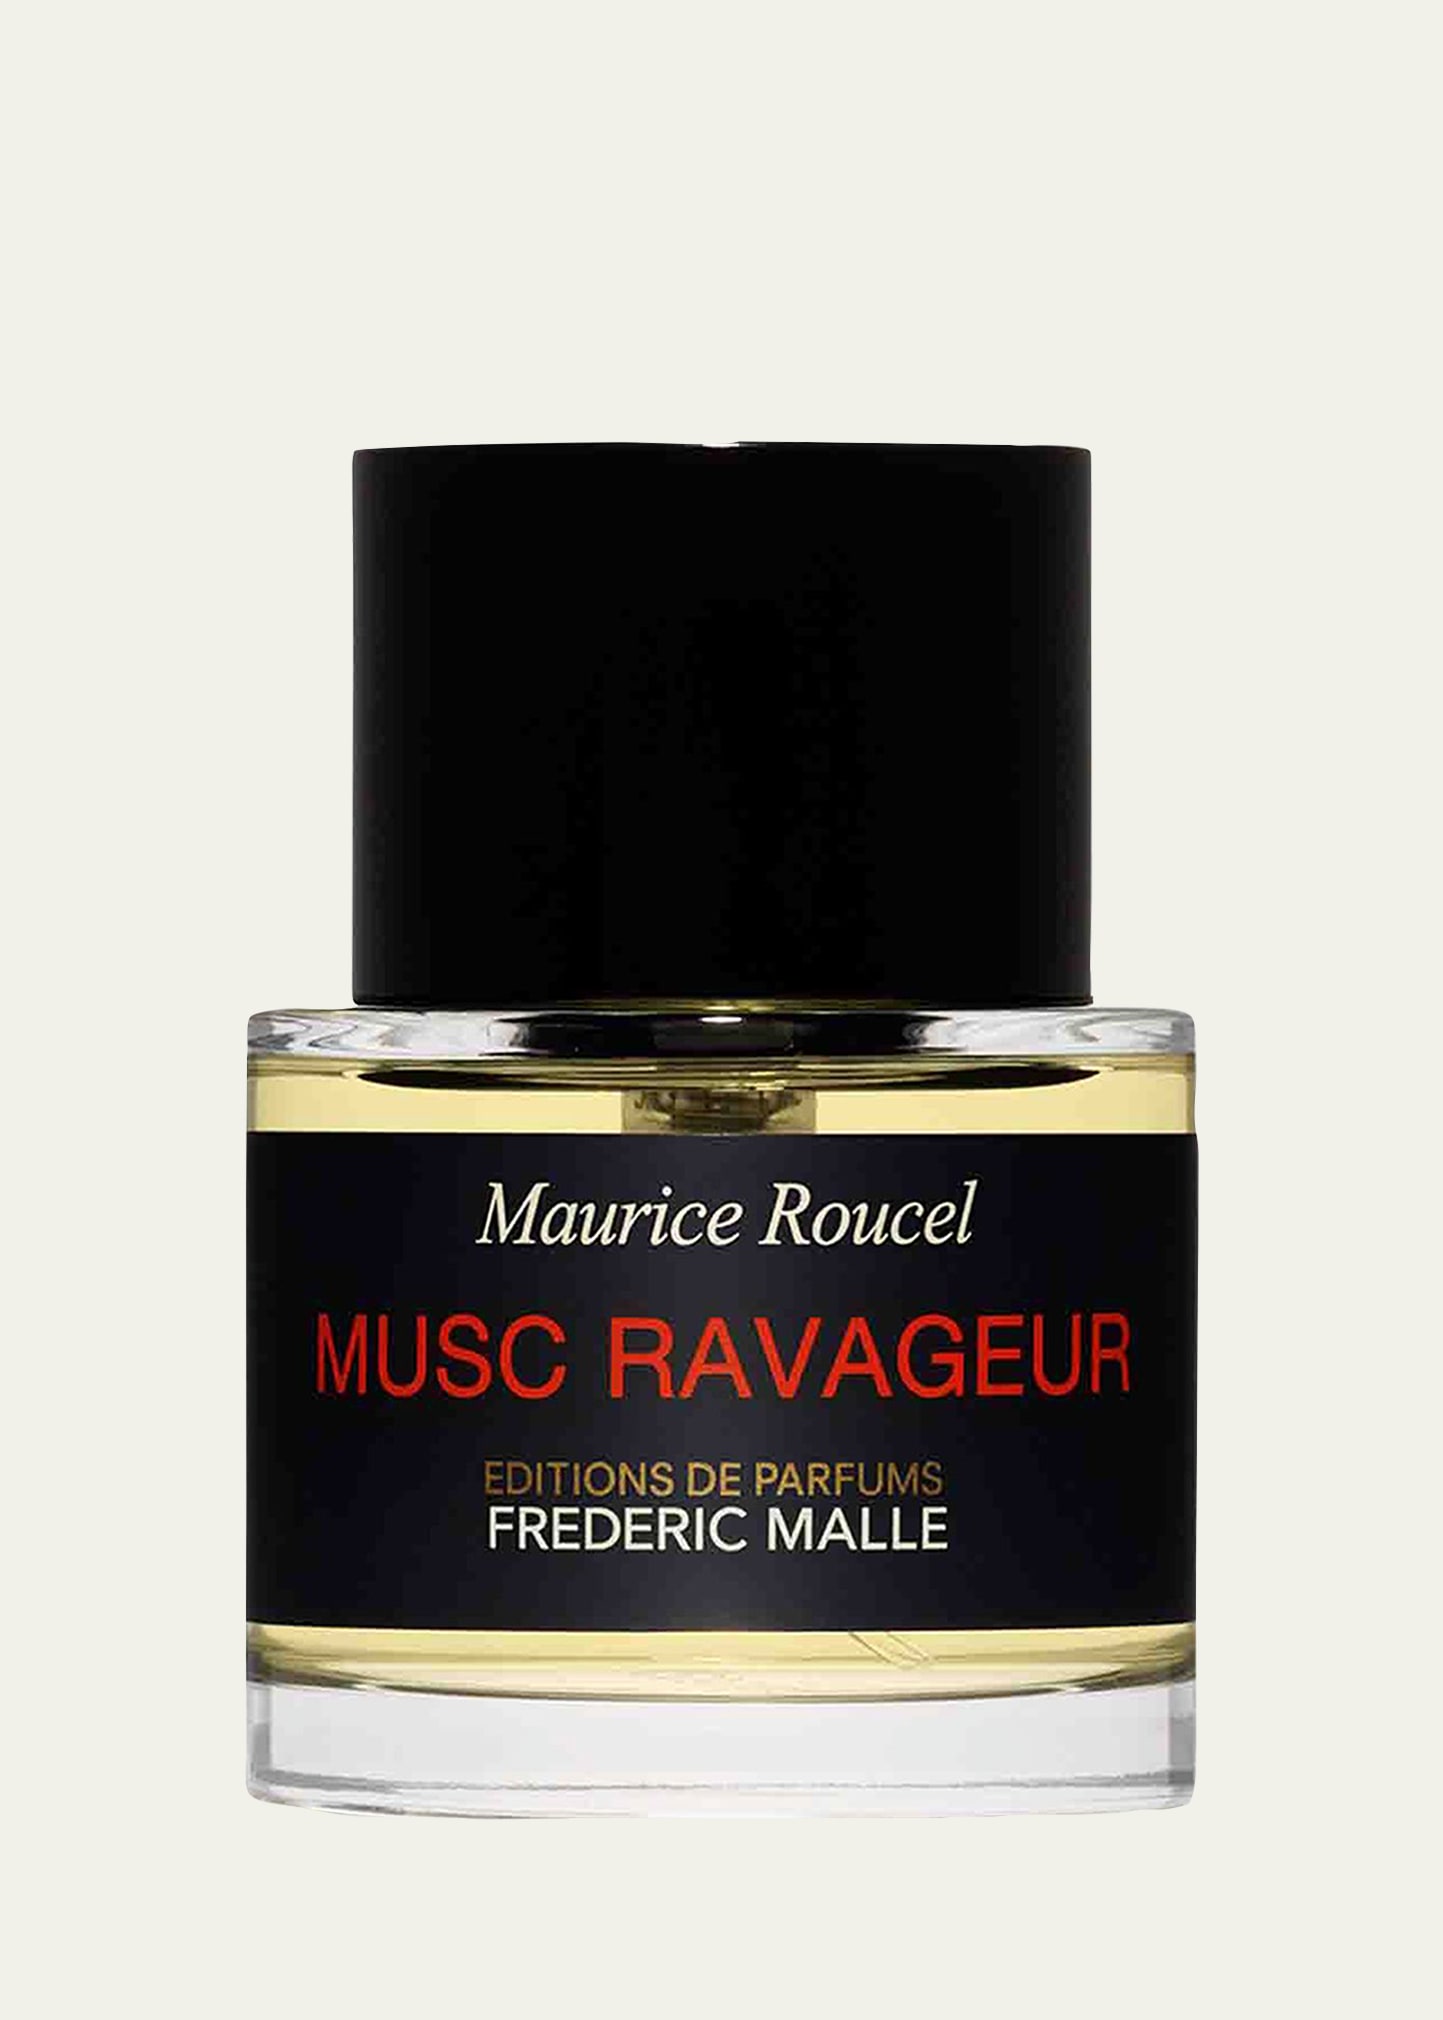 Musc Ravageur Perfume, 1.7 oz./ 50 mL